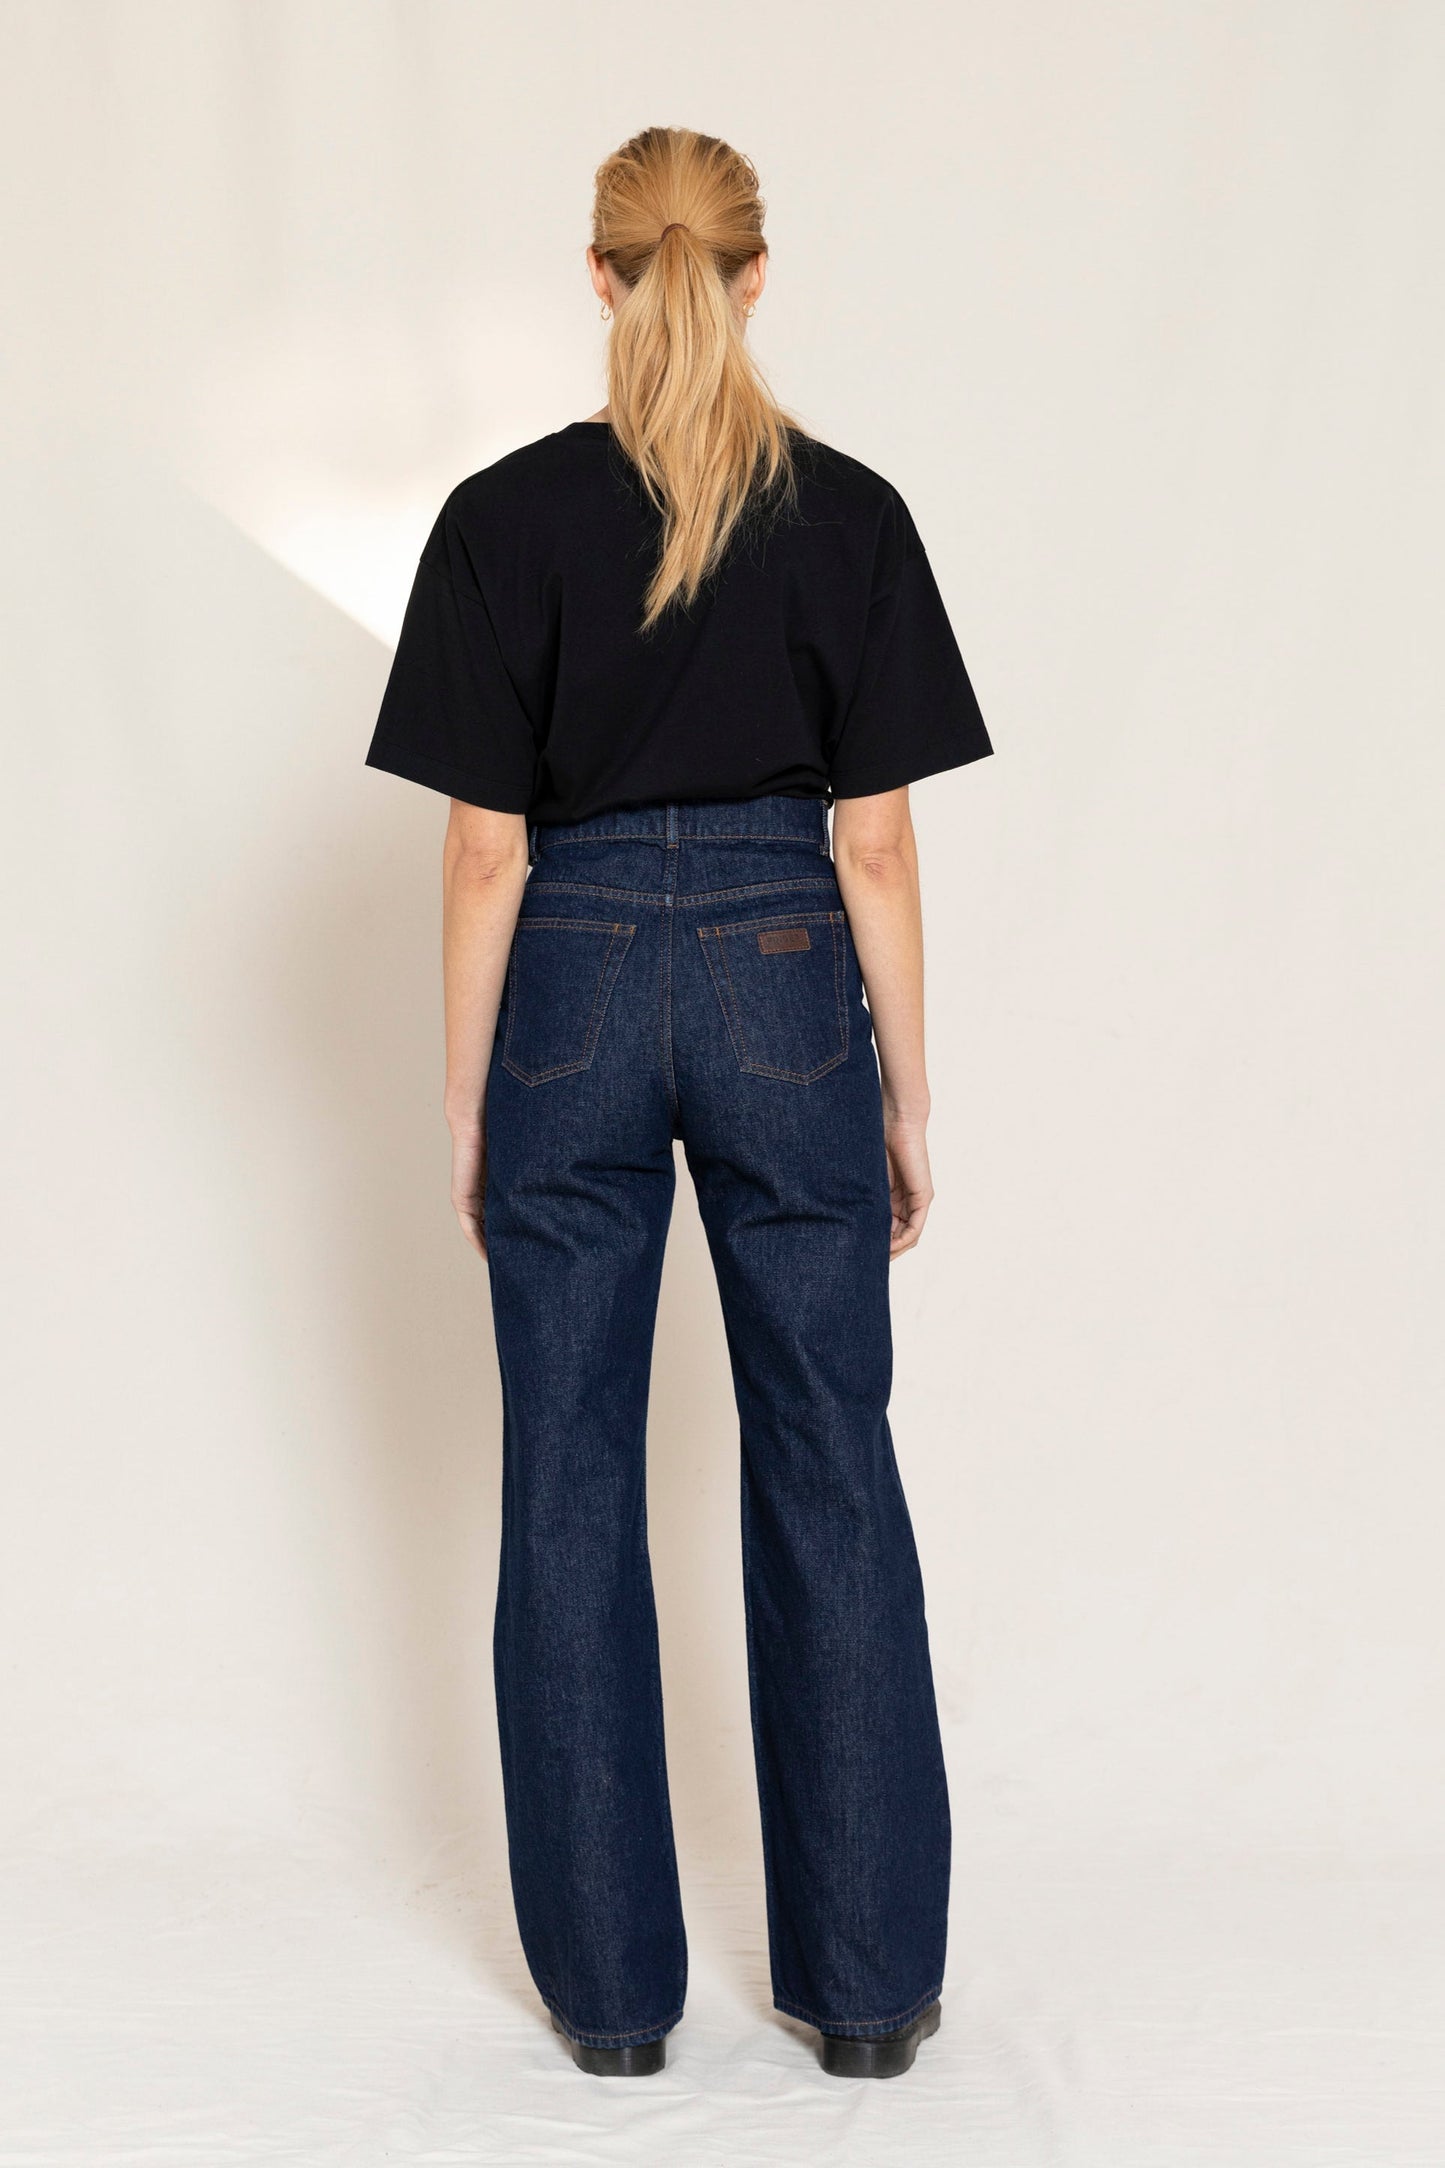 FIONA Raw Denim Blue - Flare Fit Jeans | Women